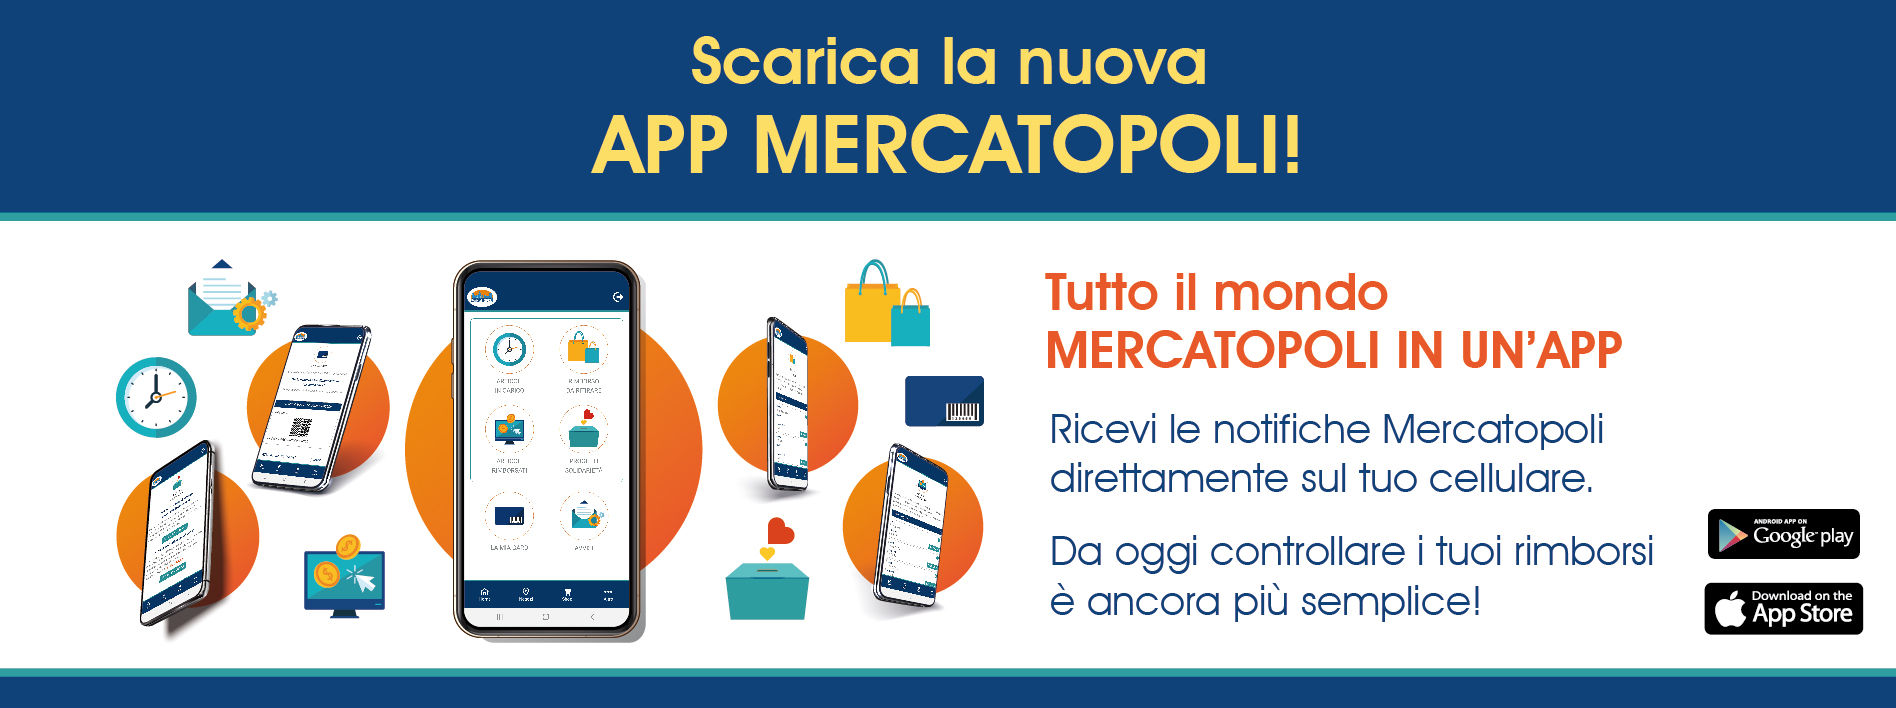 scarica l'app Mercatopoli